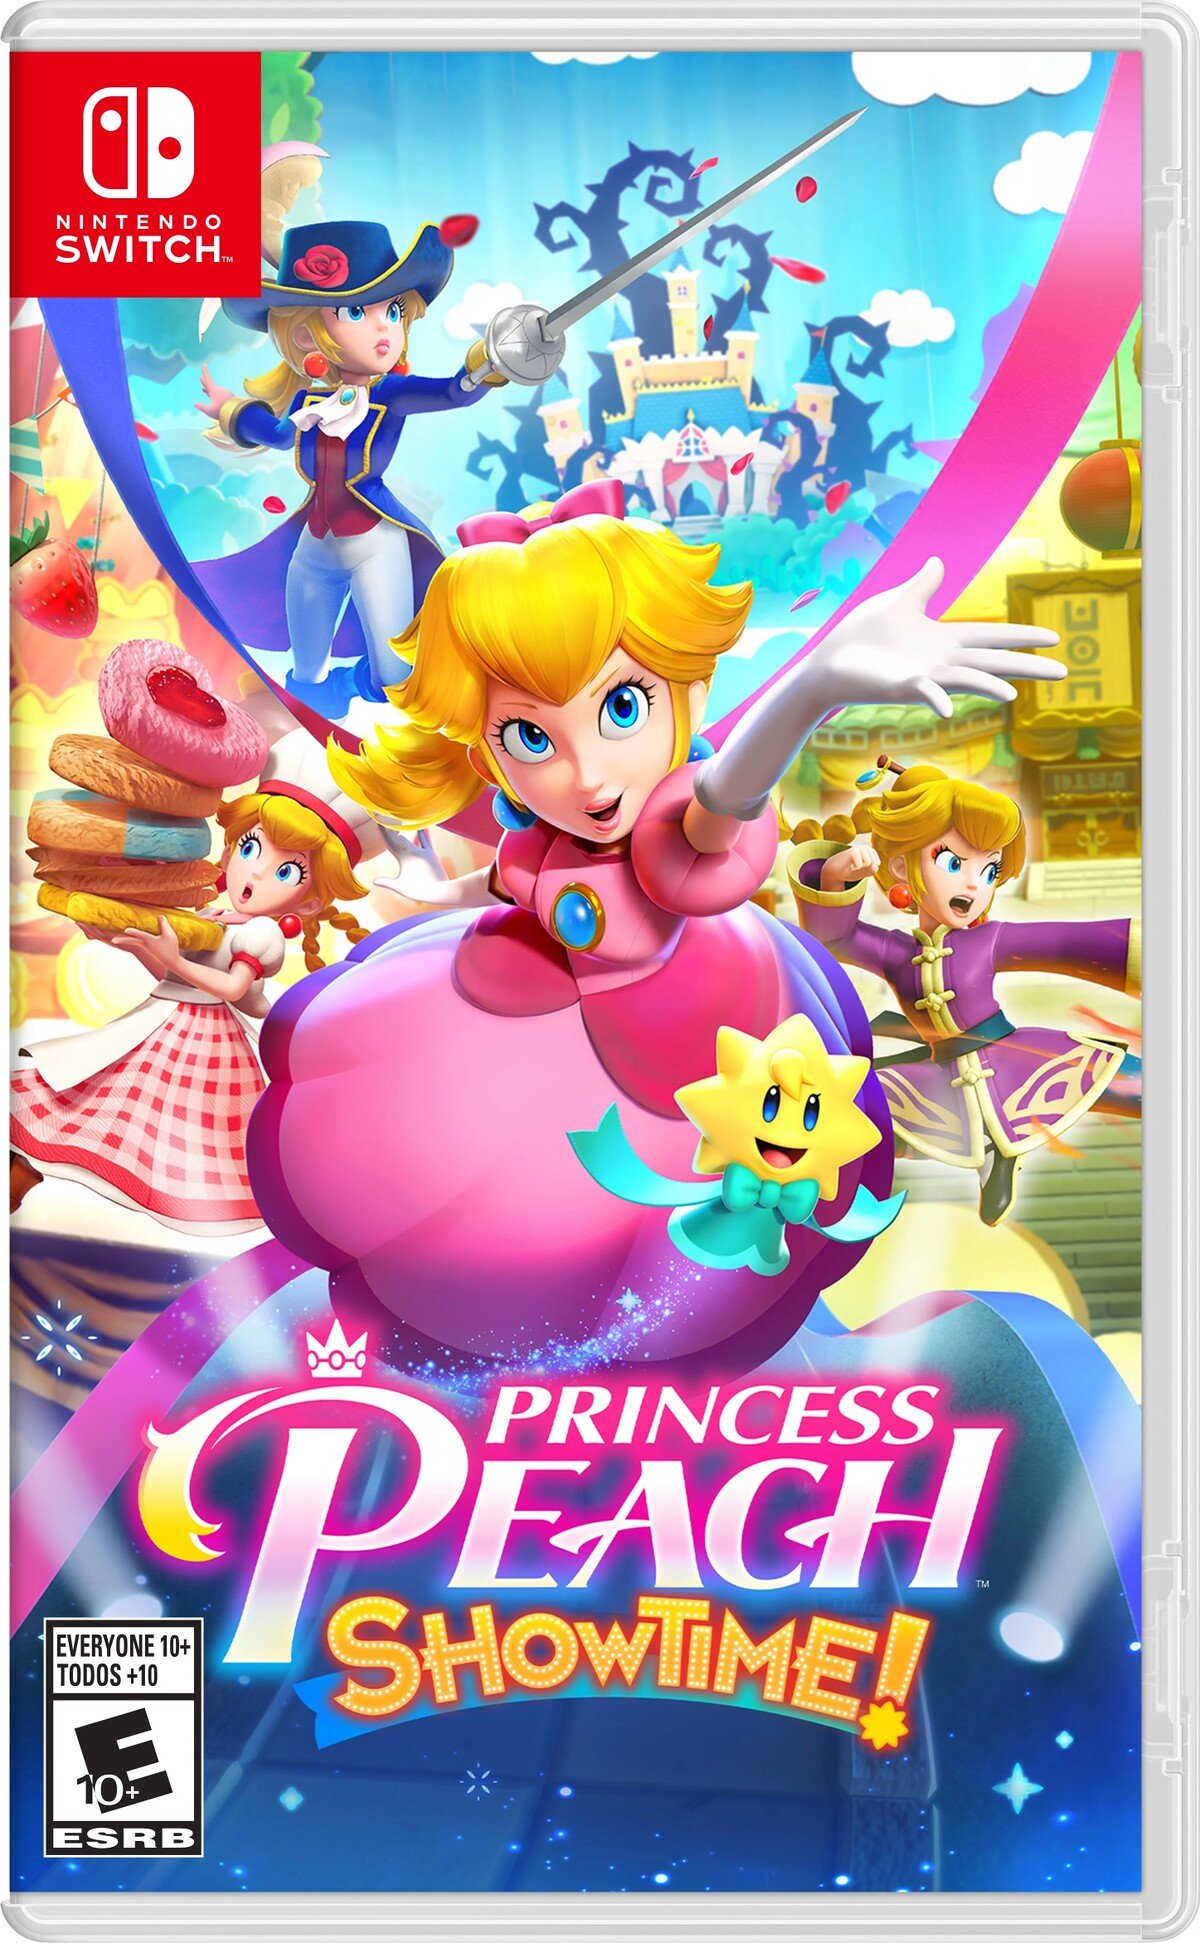 Evolution of Princess Peach in Mario Sports Games (1995 - 2021